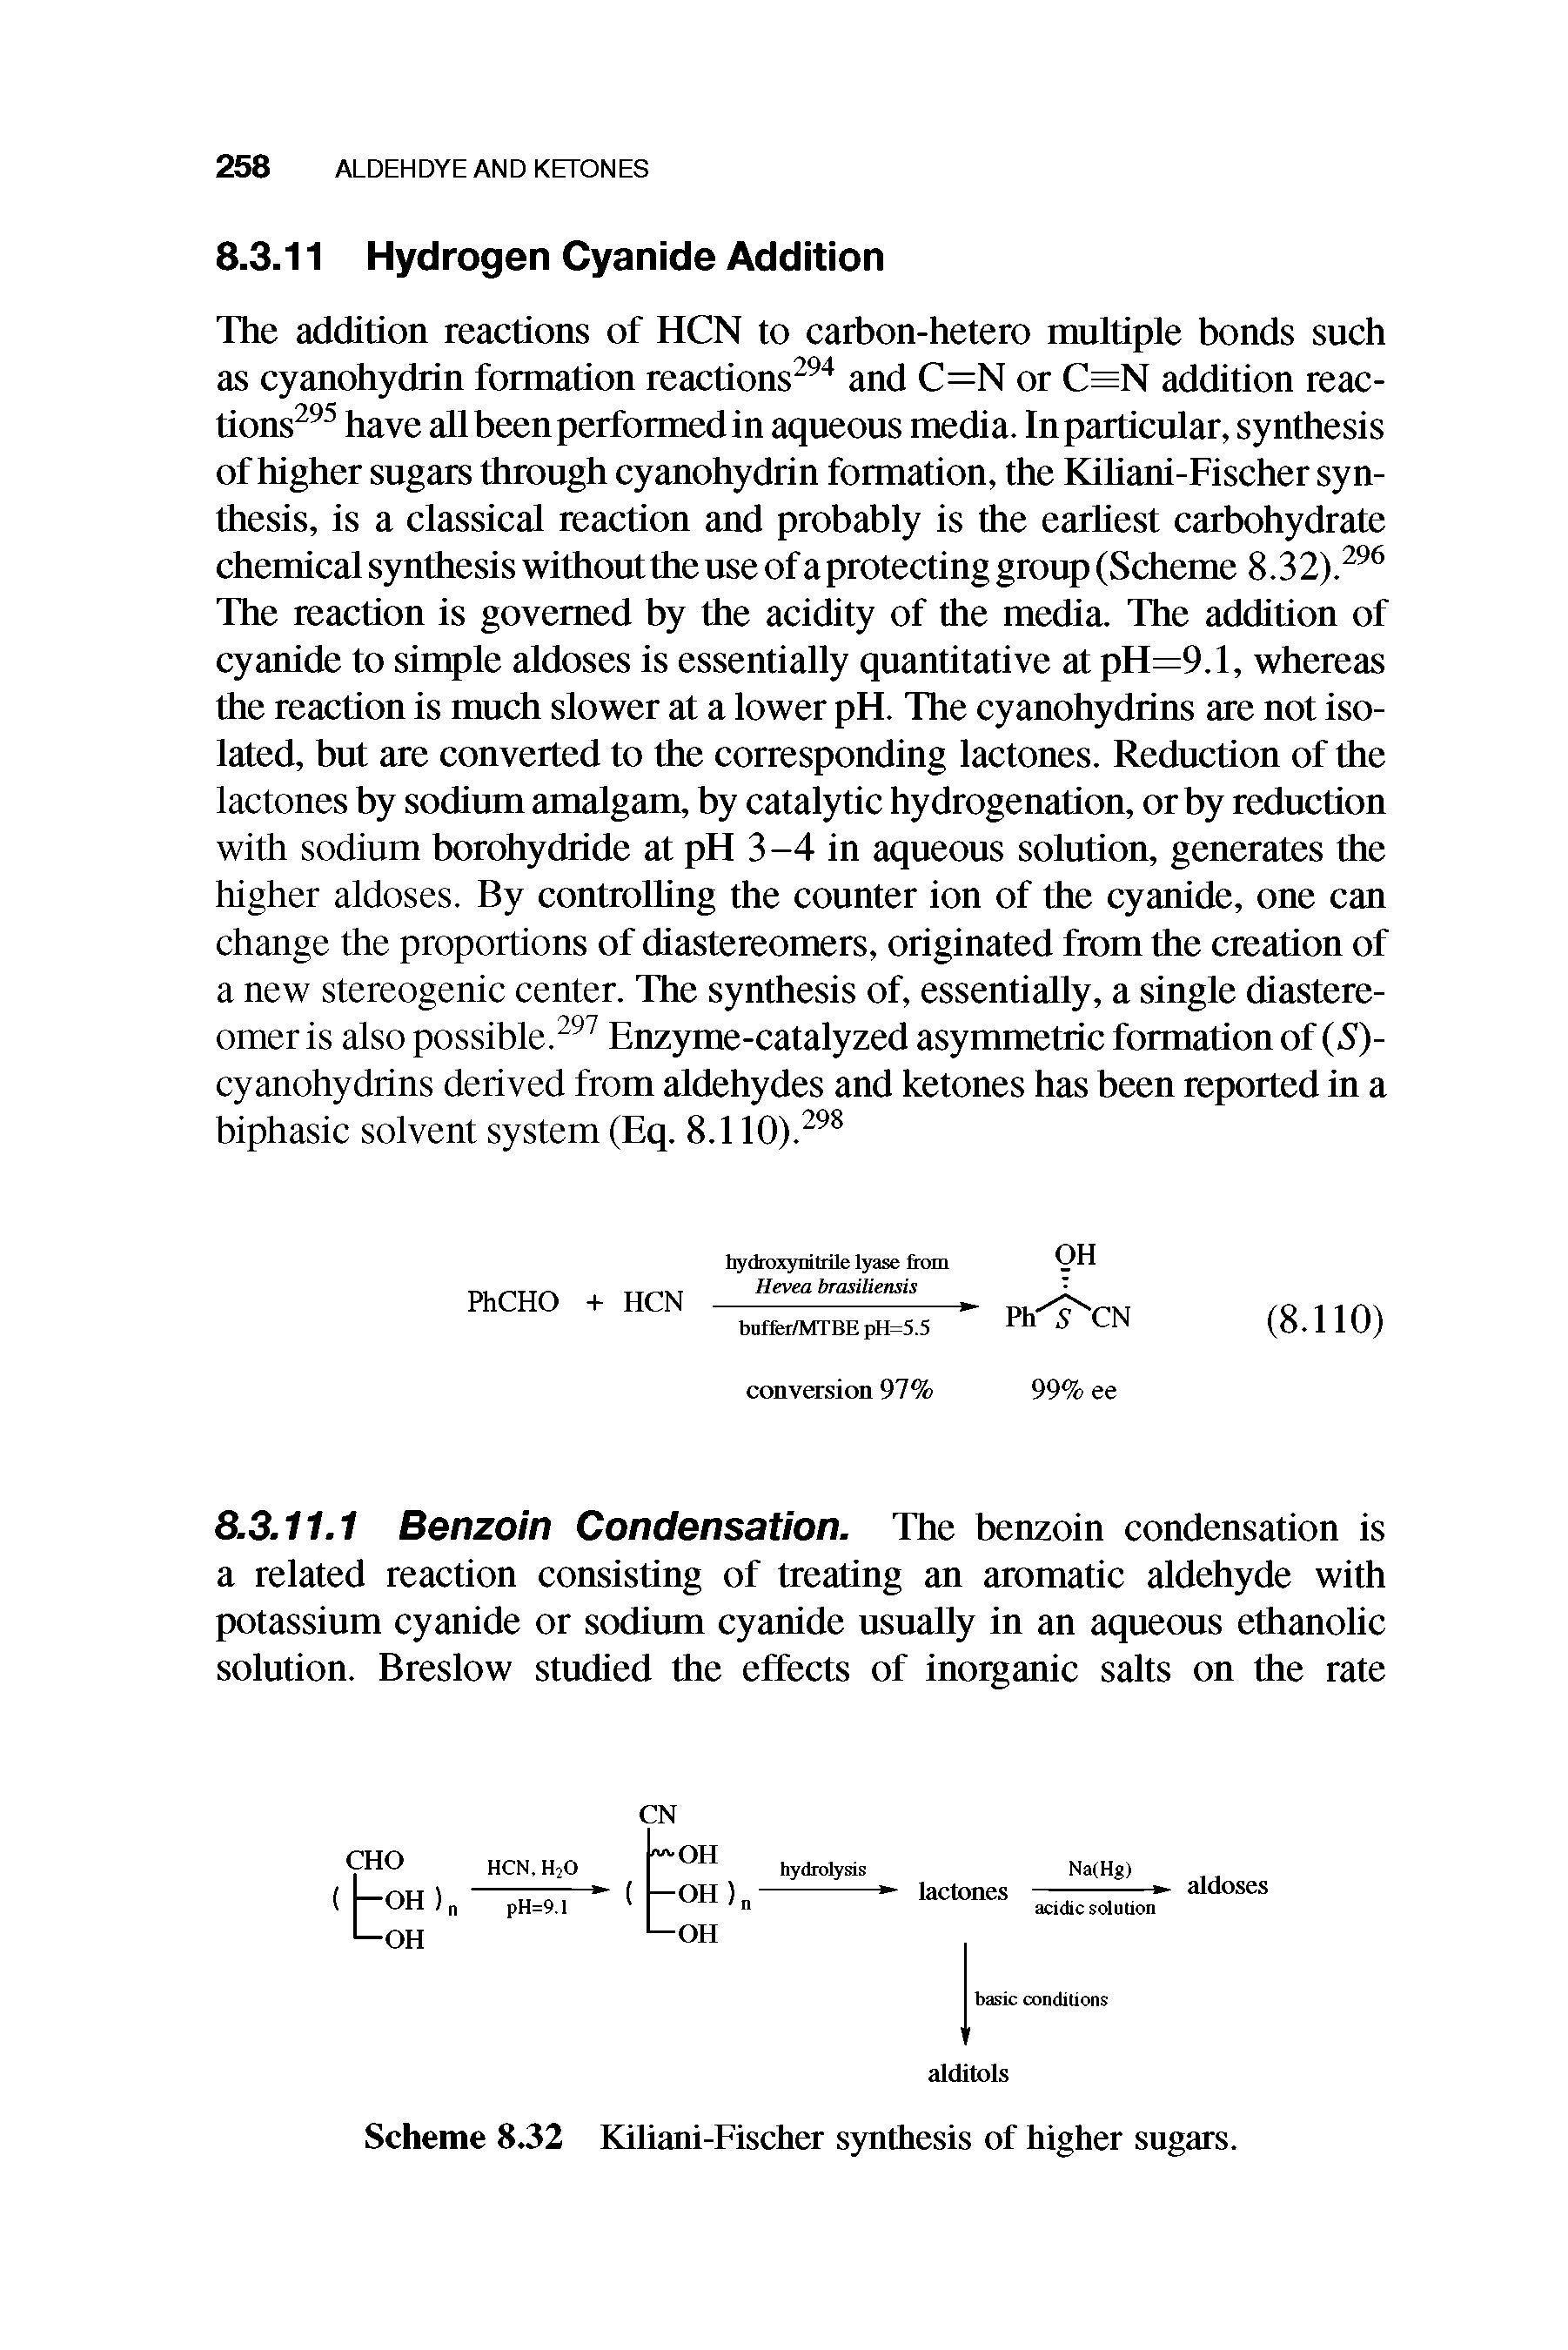 Scheme 8.32 Kiliani-Fischer synthesis of higher sugars.